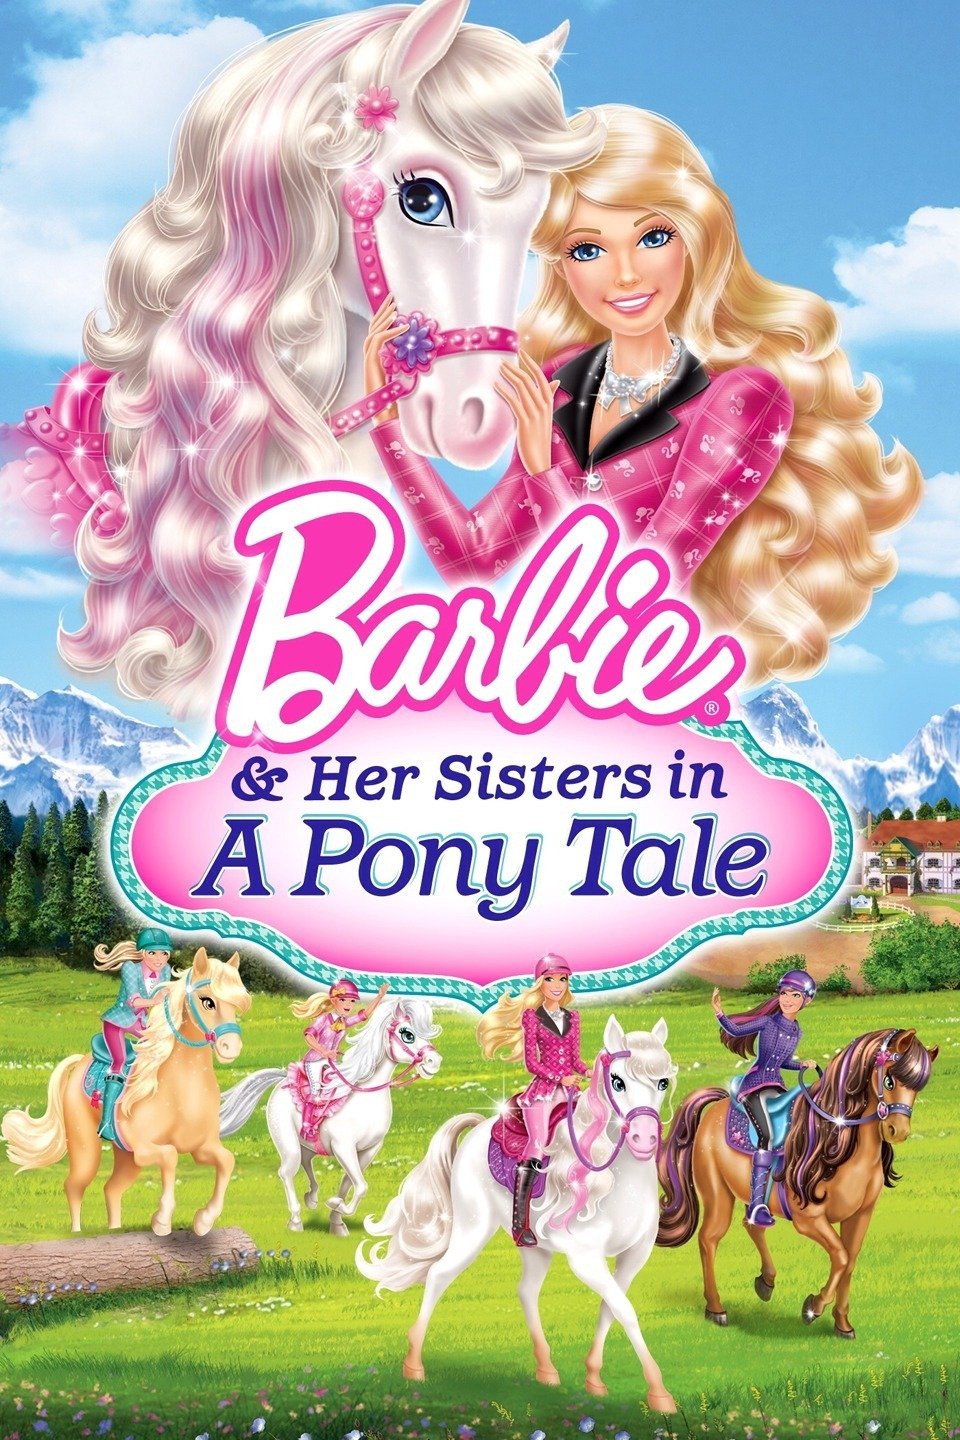 Download Film Barbie Island Princess Sub Indo